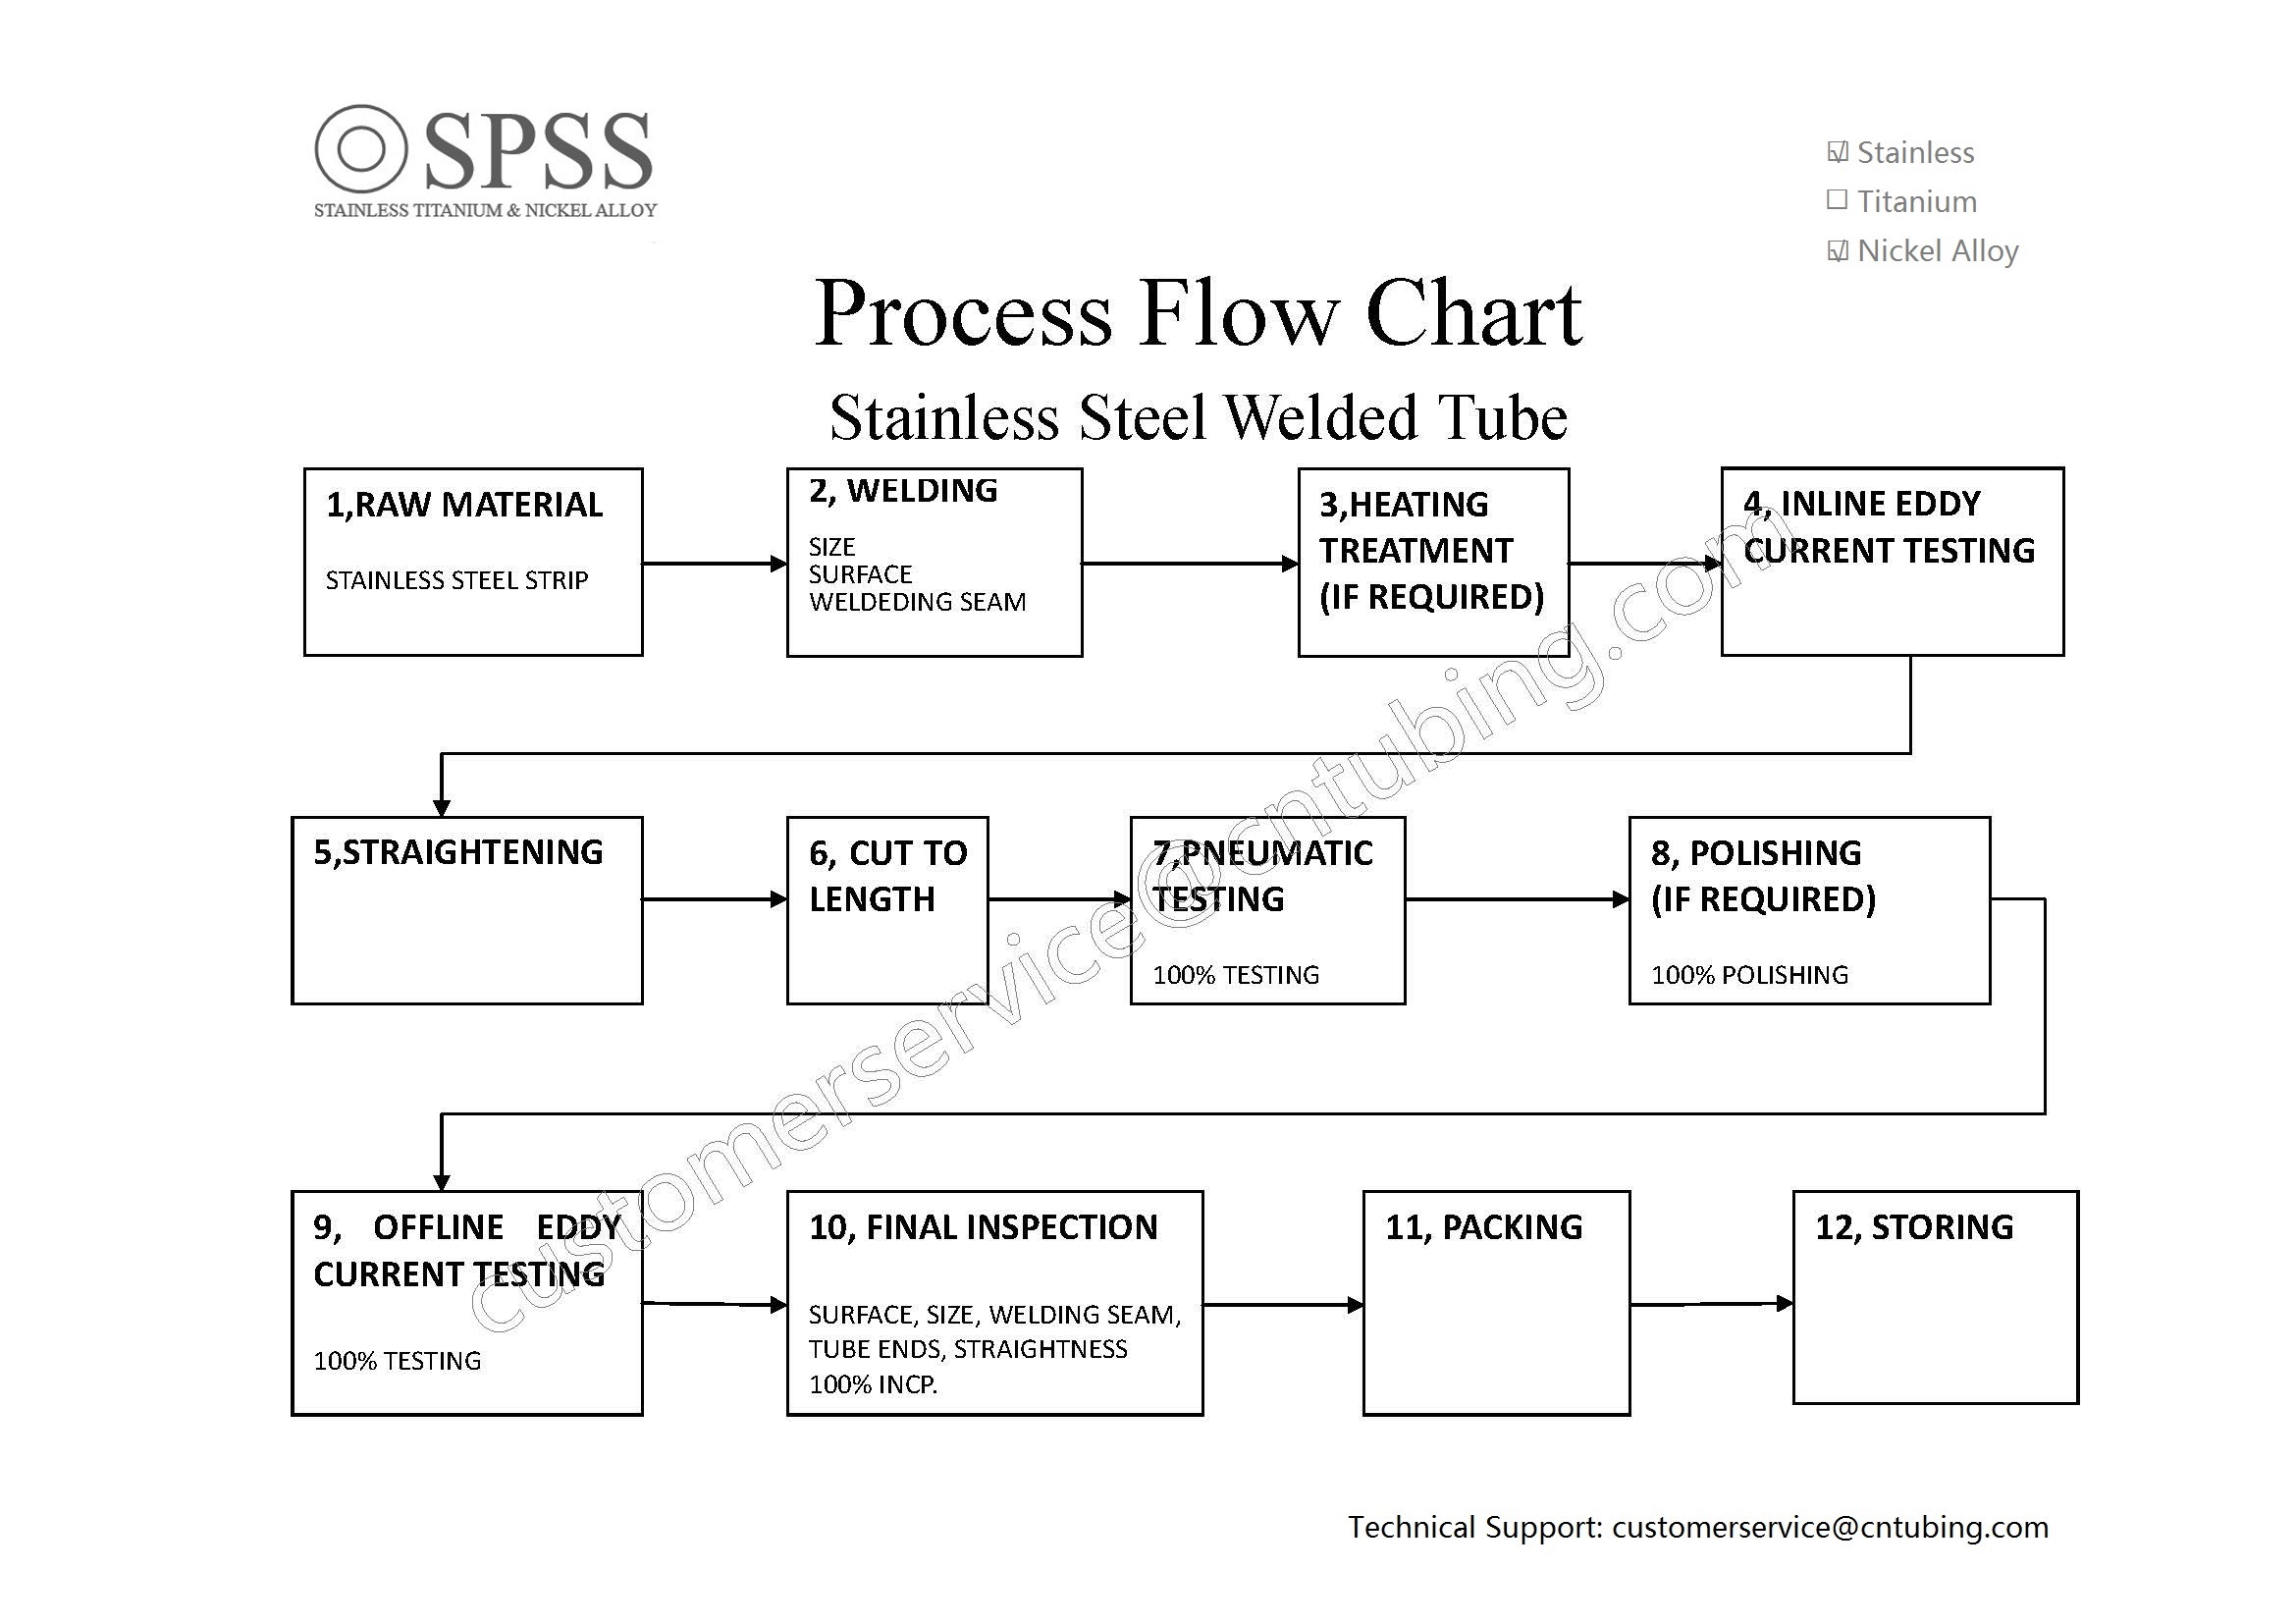 process flow chart- Stainless Steel Welded Tube.jpg